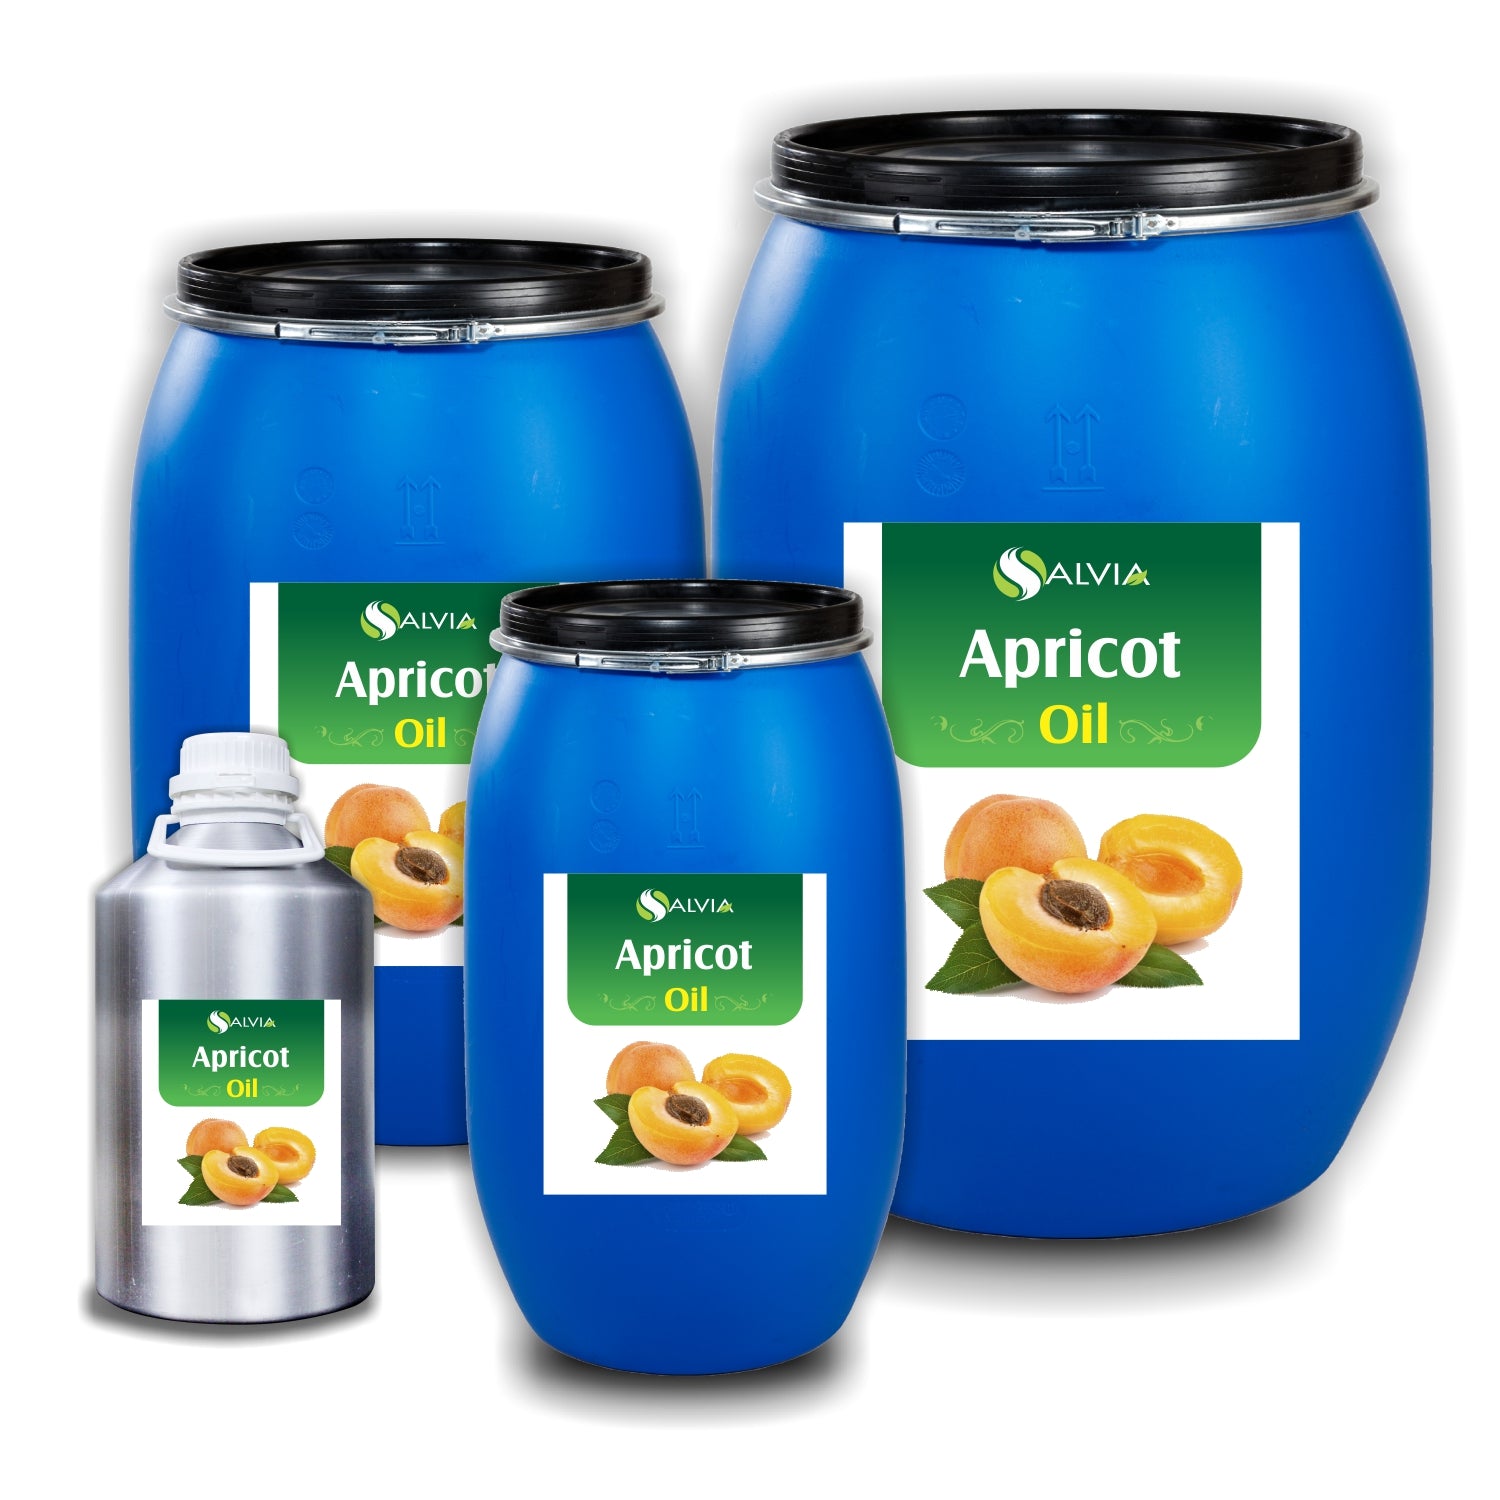 Salvia Natural Carrier Oils 10kg Apricot Oil (Prunus armeniaca) 100% Natural Pure Carrier Oil